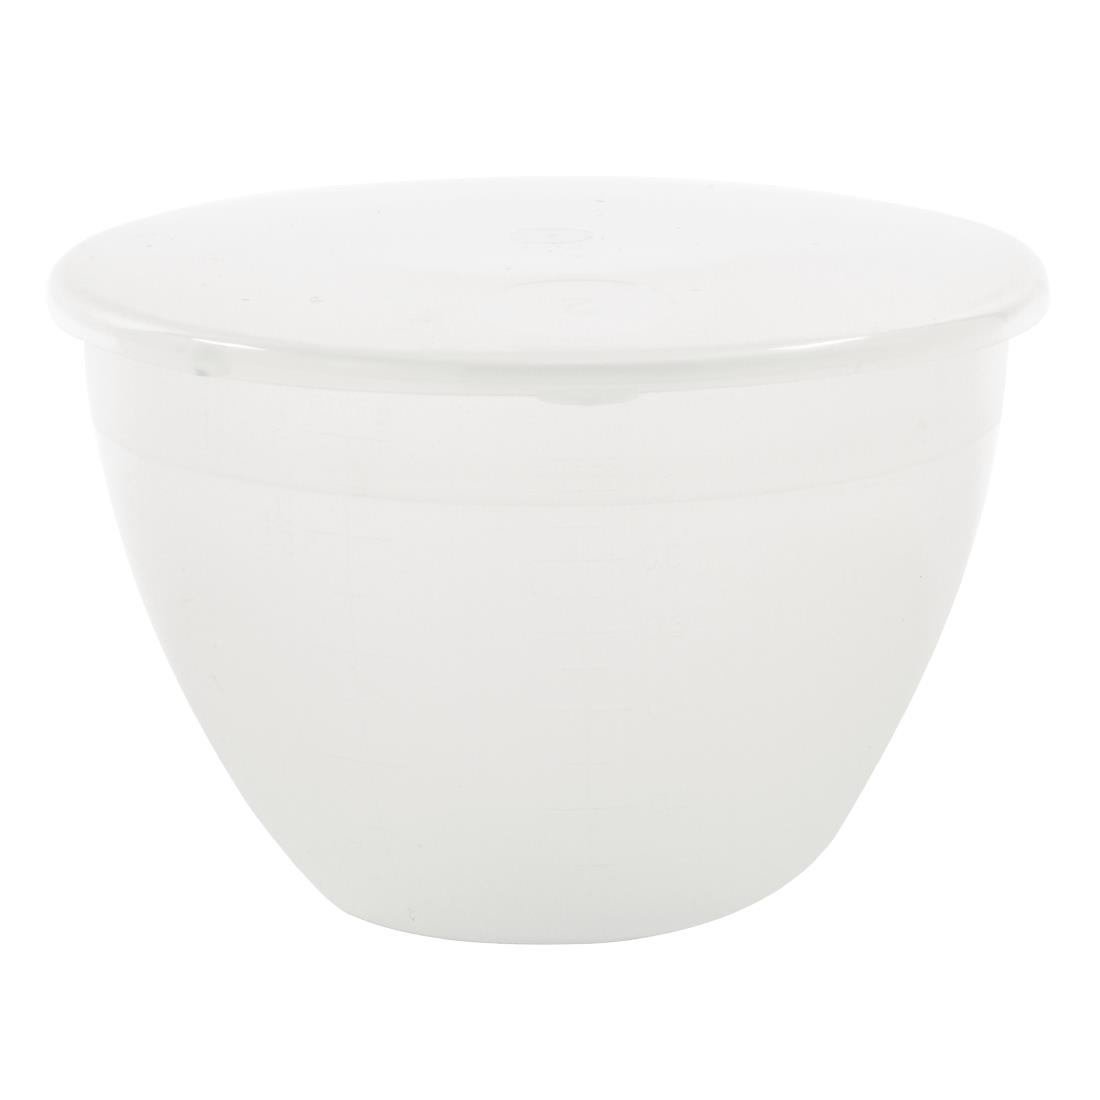 Kitchen Craft Polypropylene Pudding Basins 1000ml (Pack of 12)